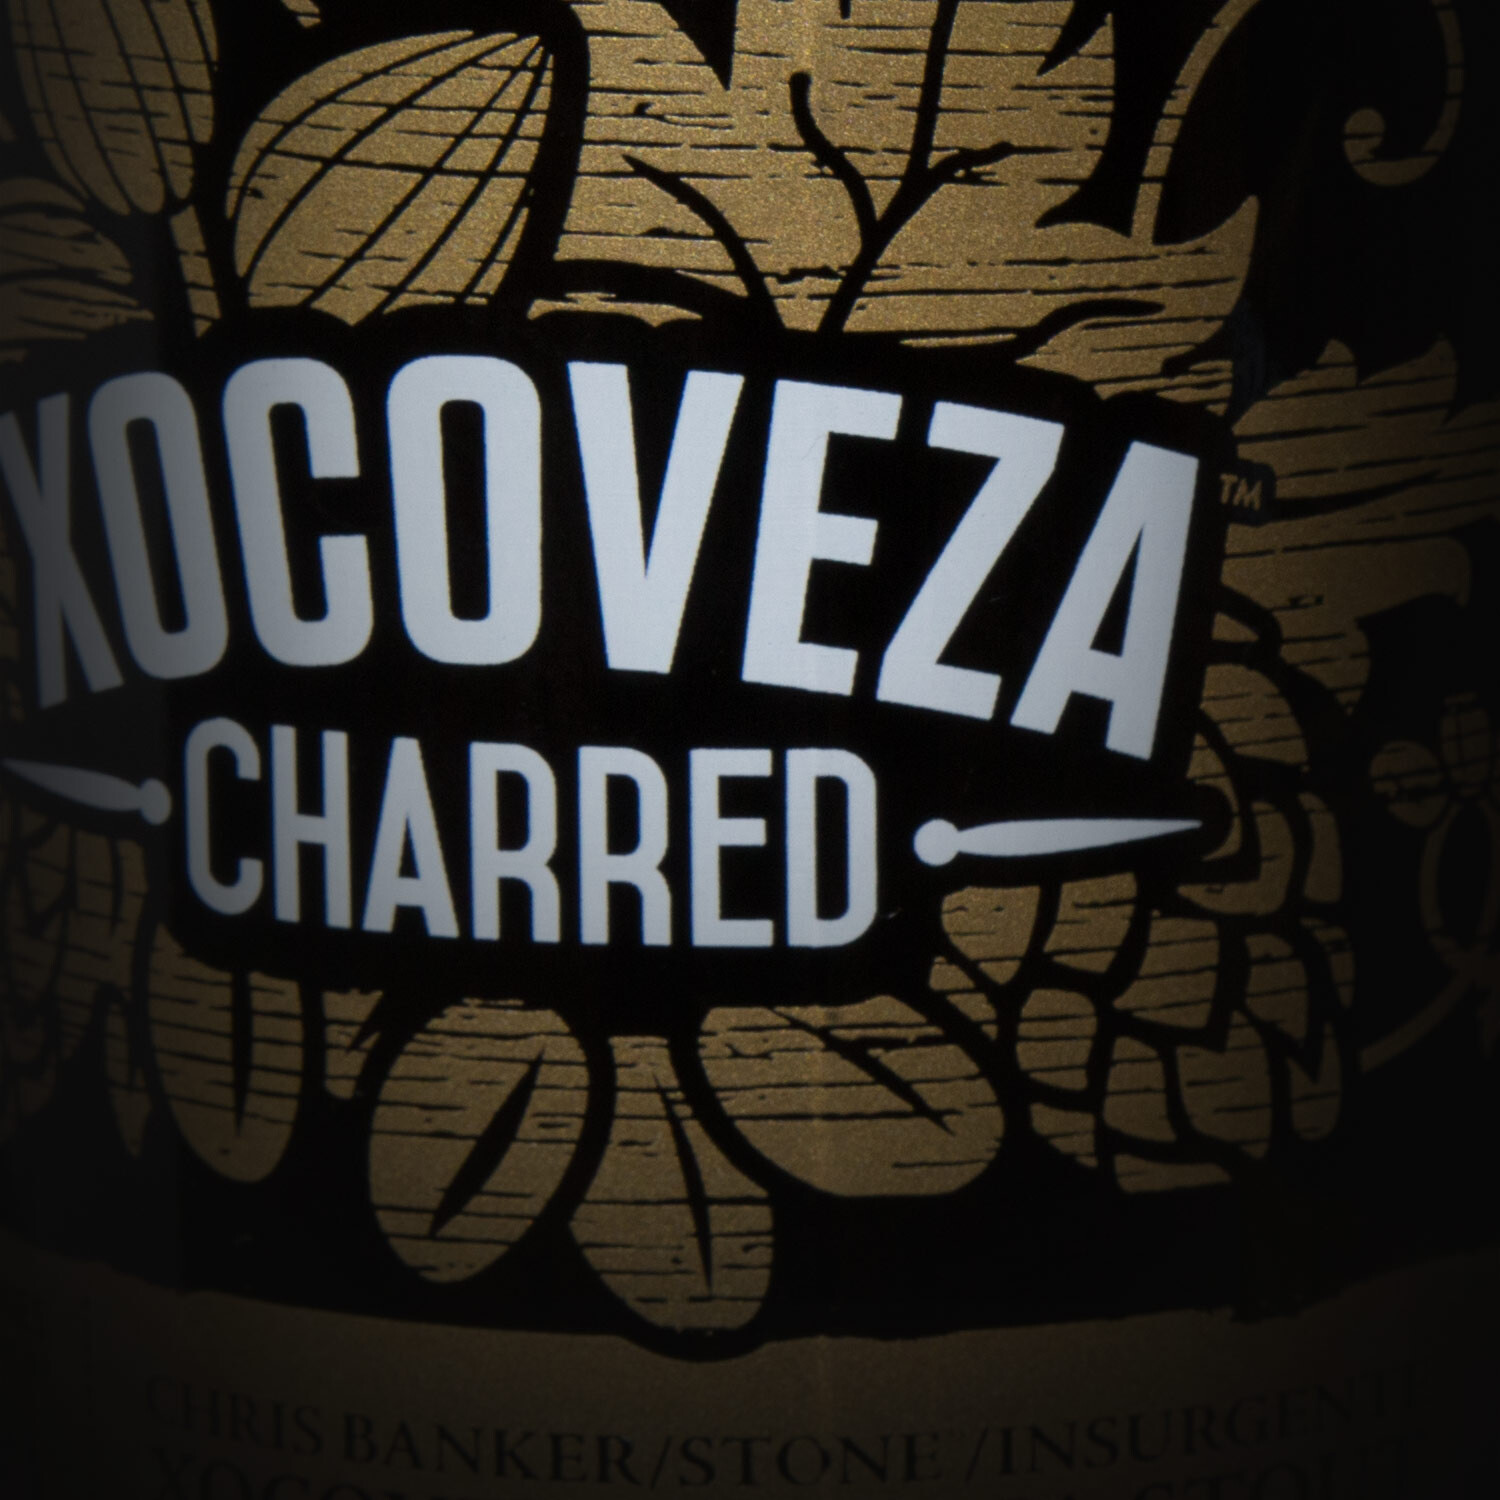 Xocoveza Charred close-up